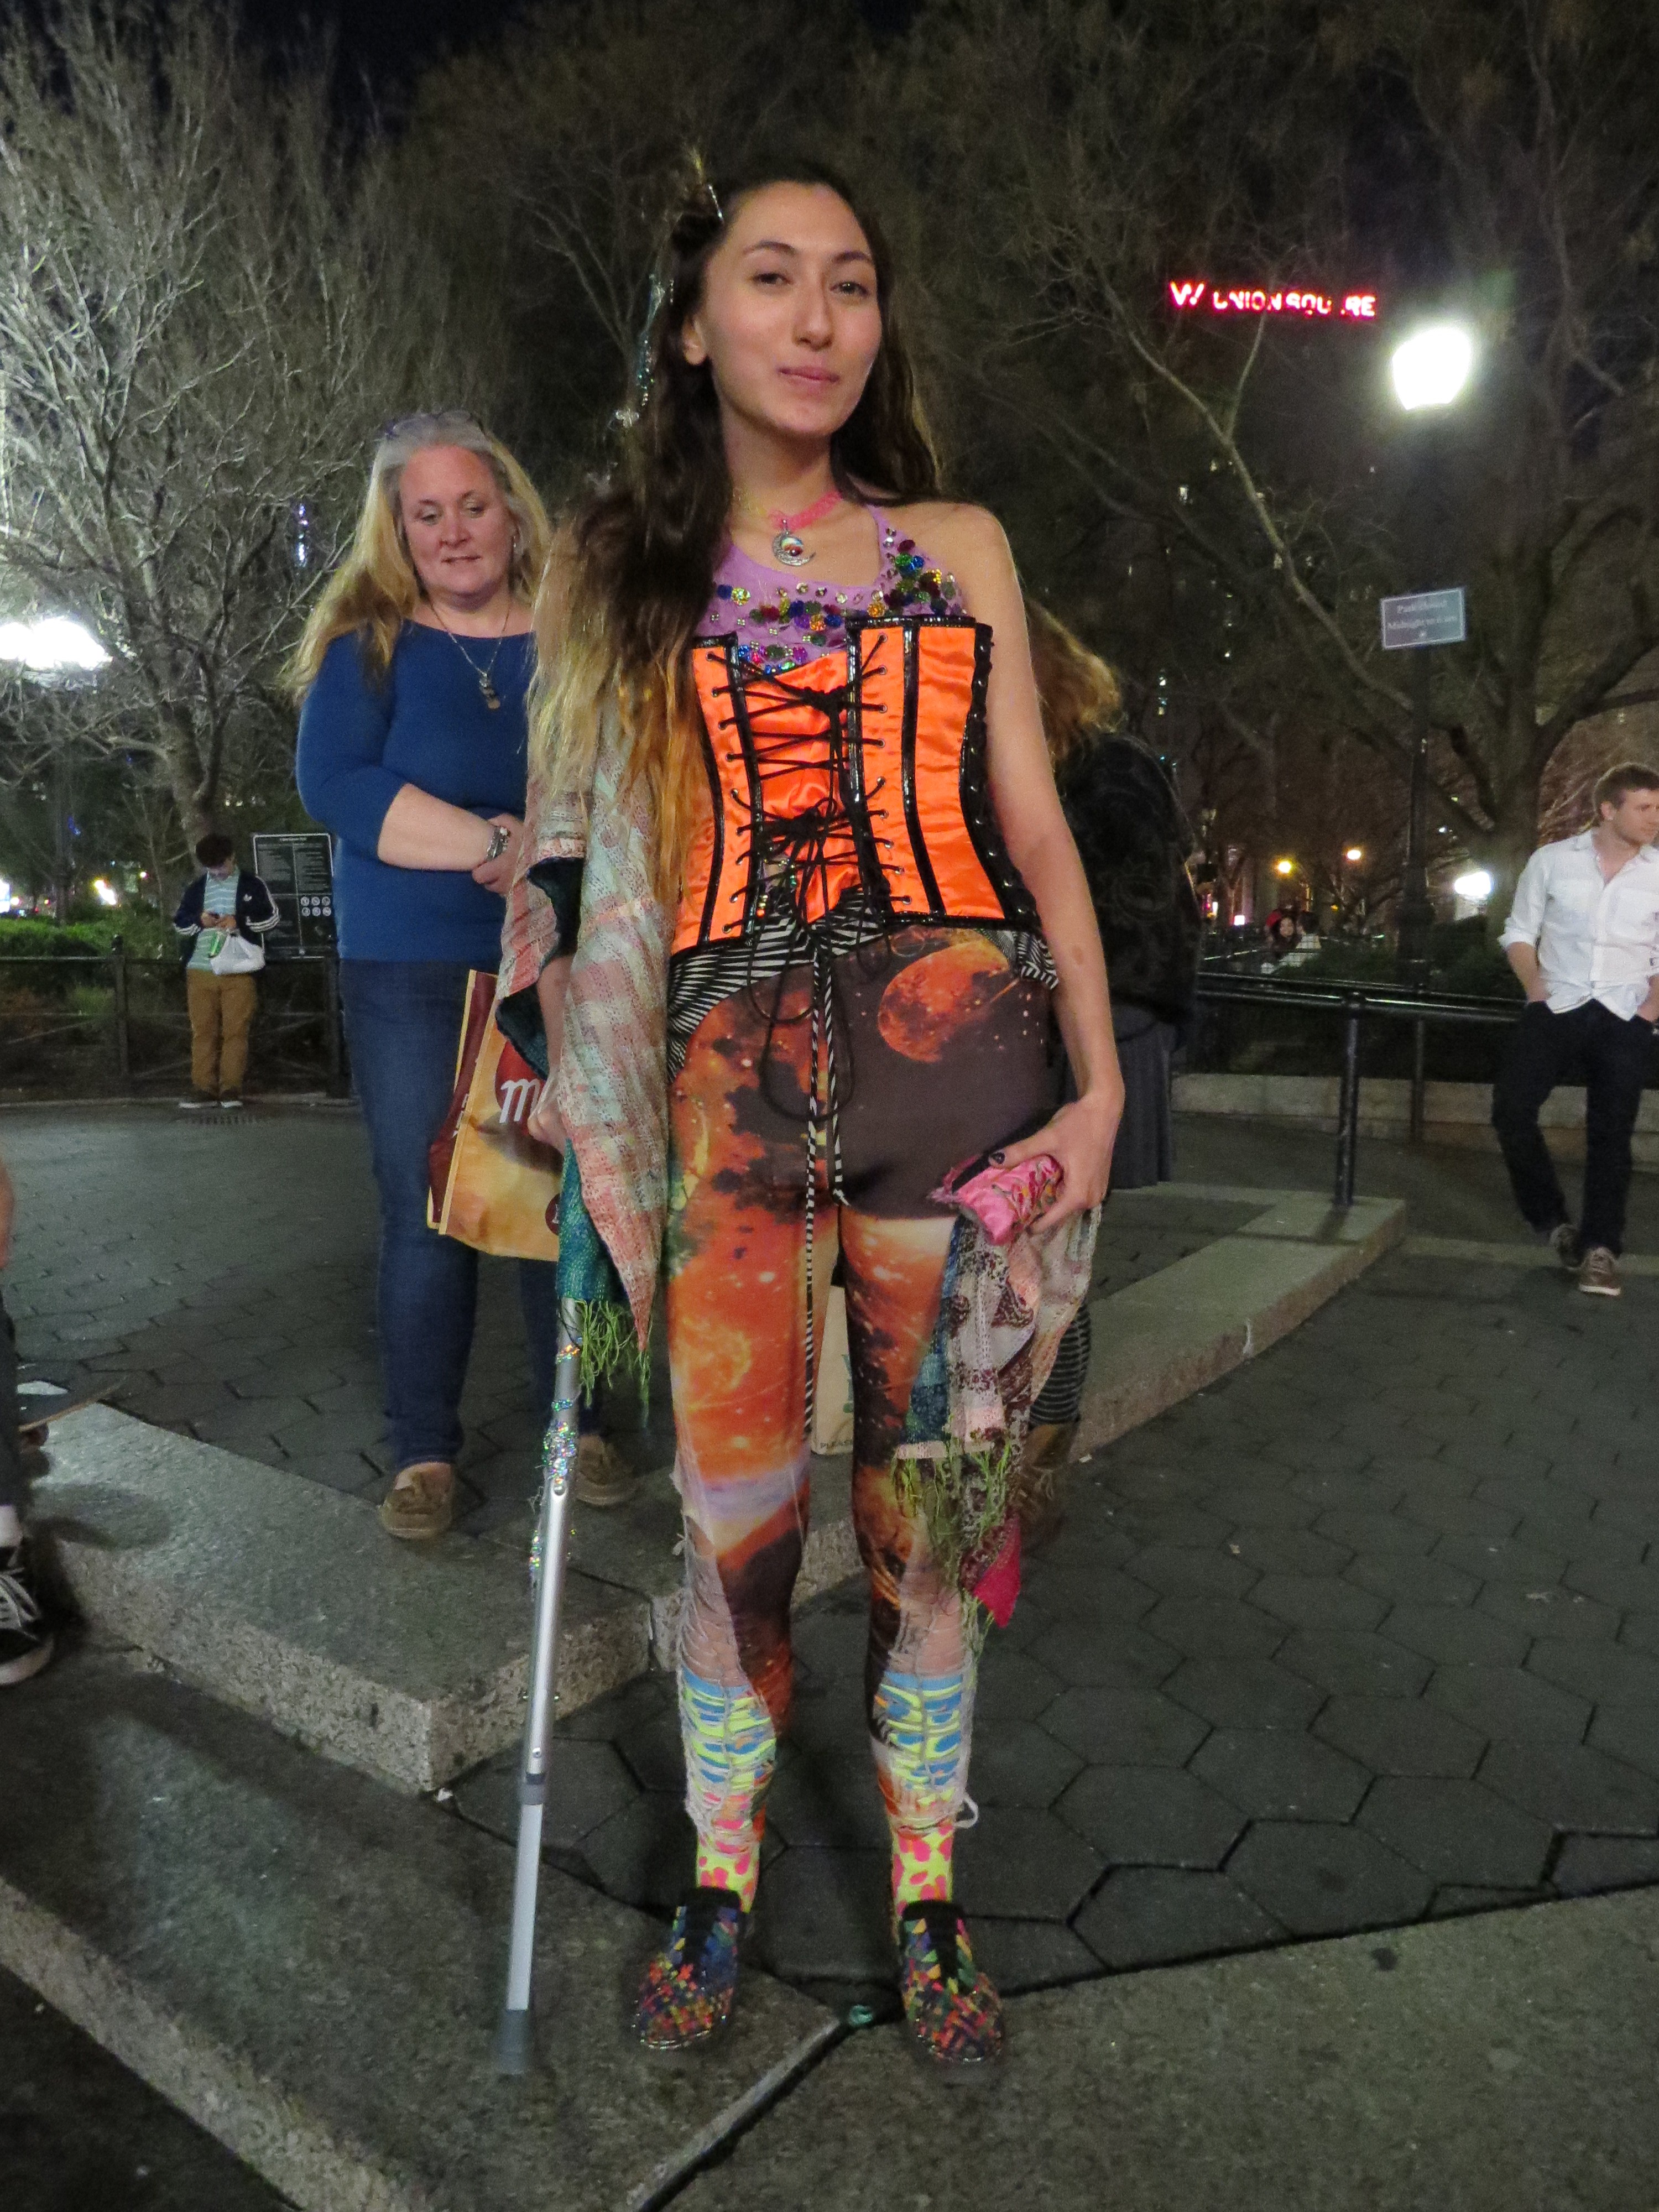 Deadhead Girl in orange corcet w/crutch